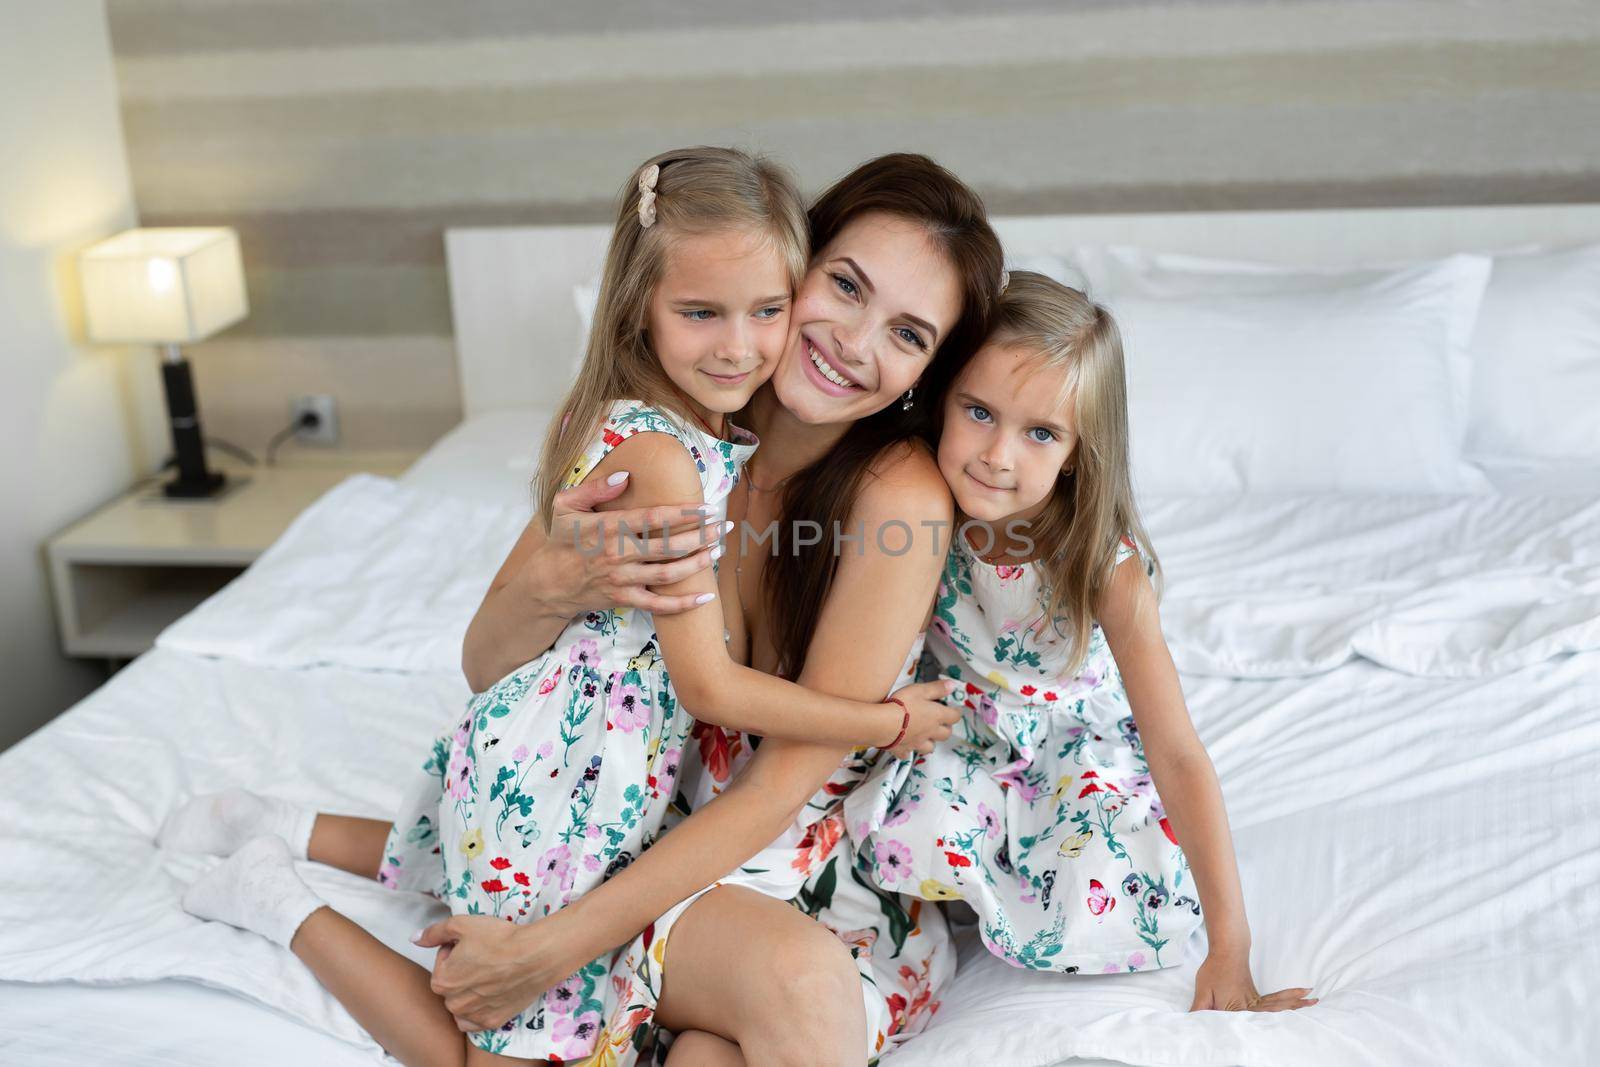 Twin girls hug their mom in a hotel room